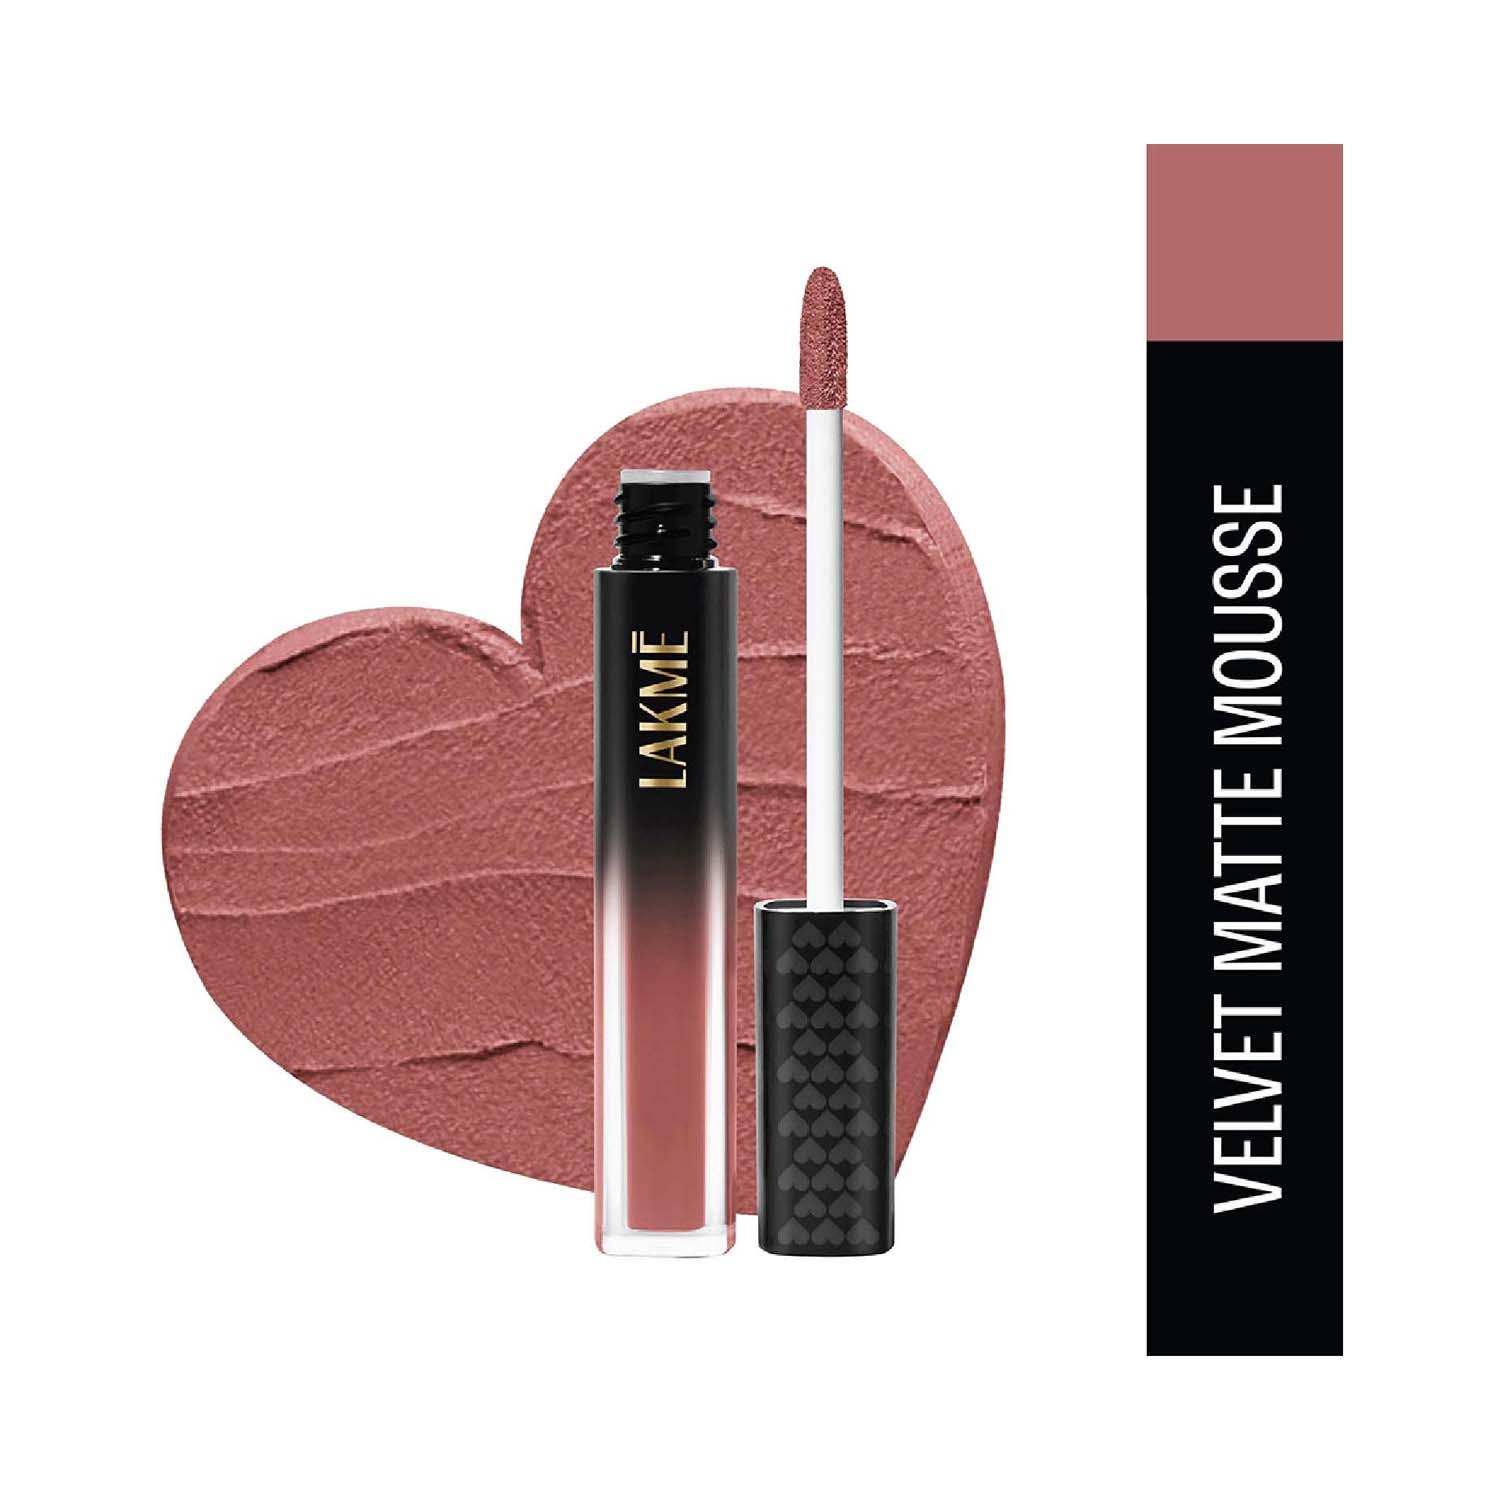 Lakme | Lakme Extraordin-Airy Lip Mousse Liquid Lipstick - Blush Nude (4.6g)